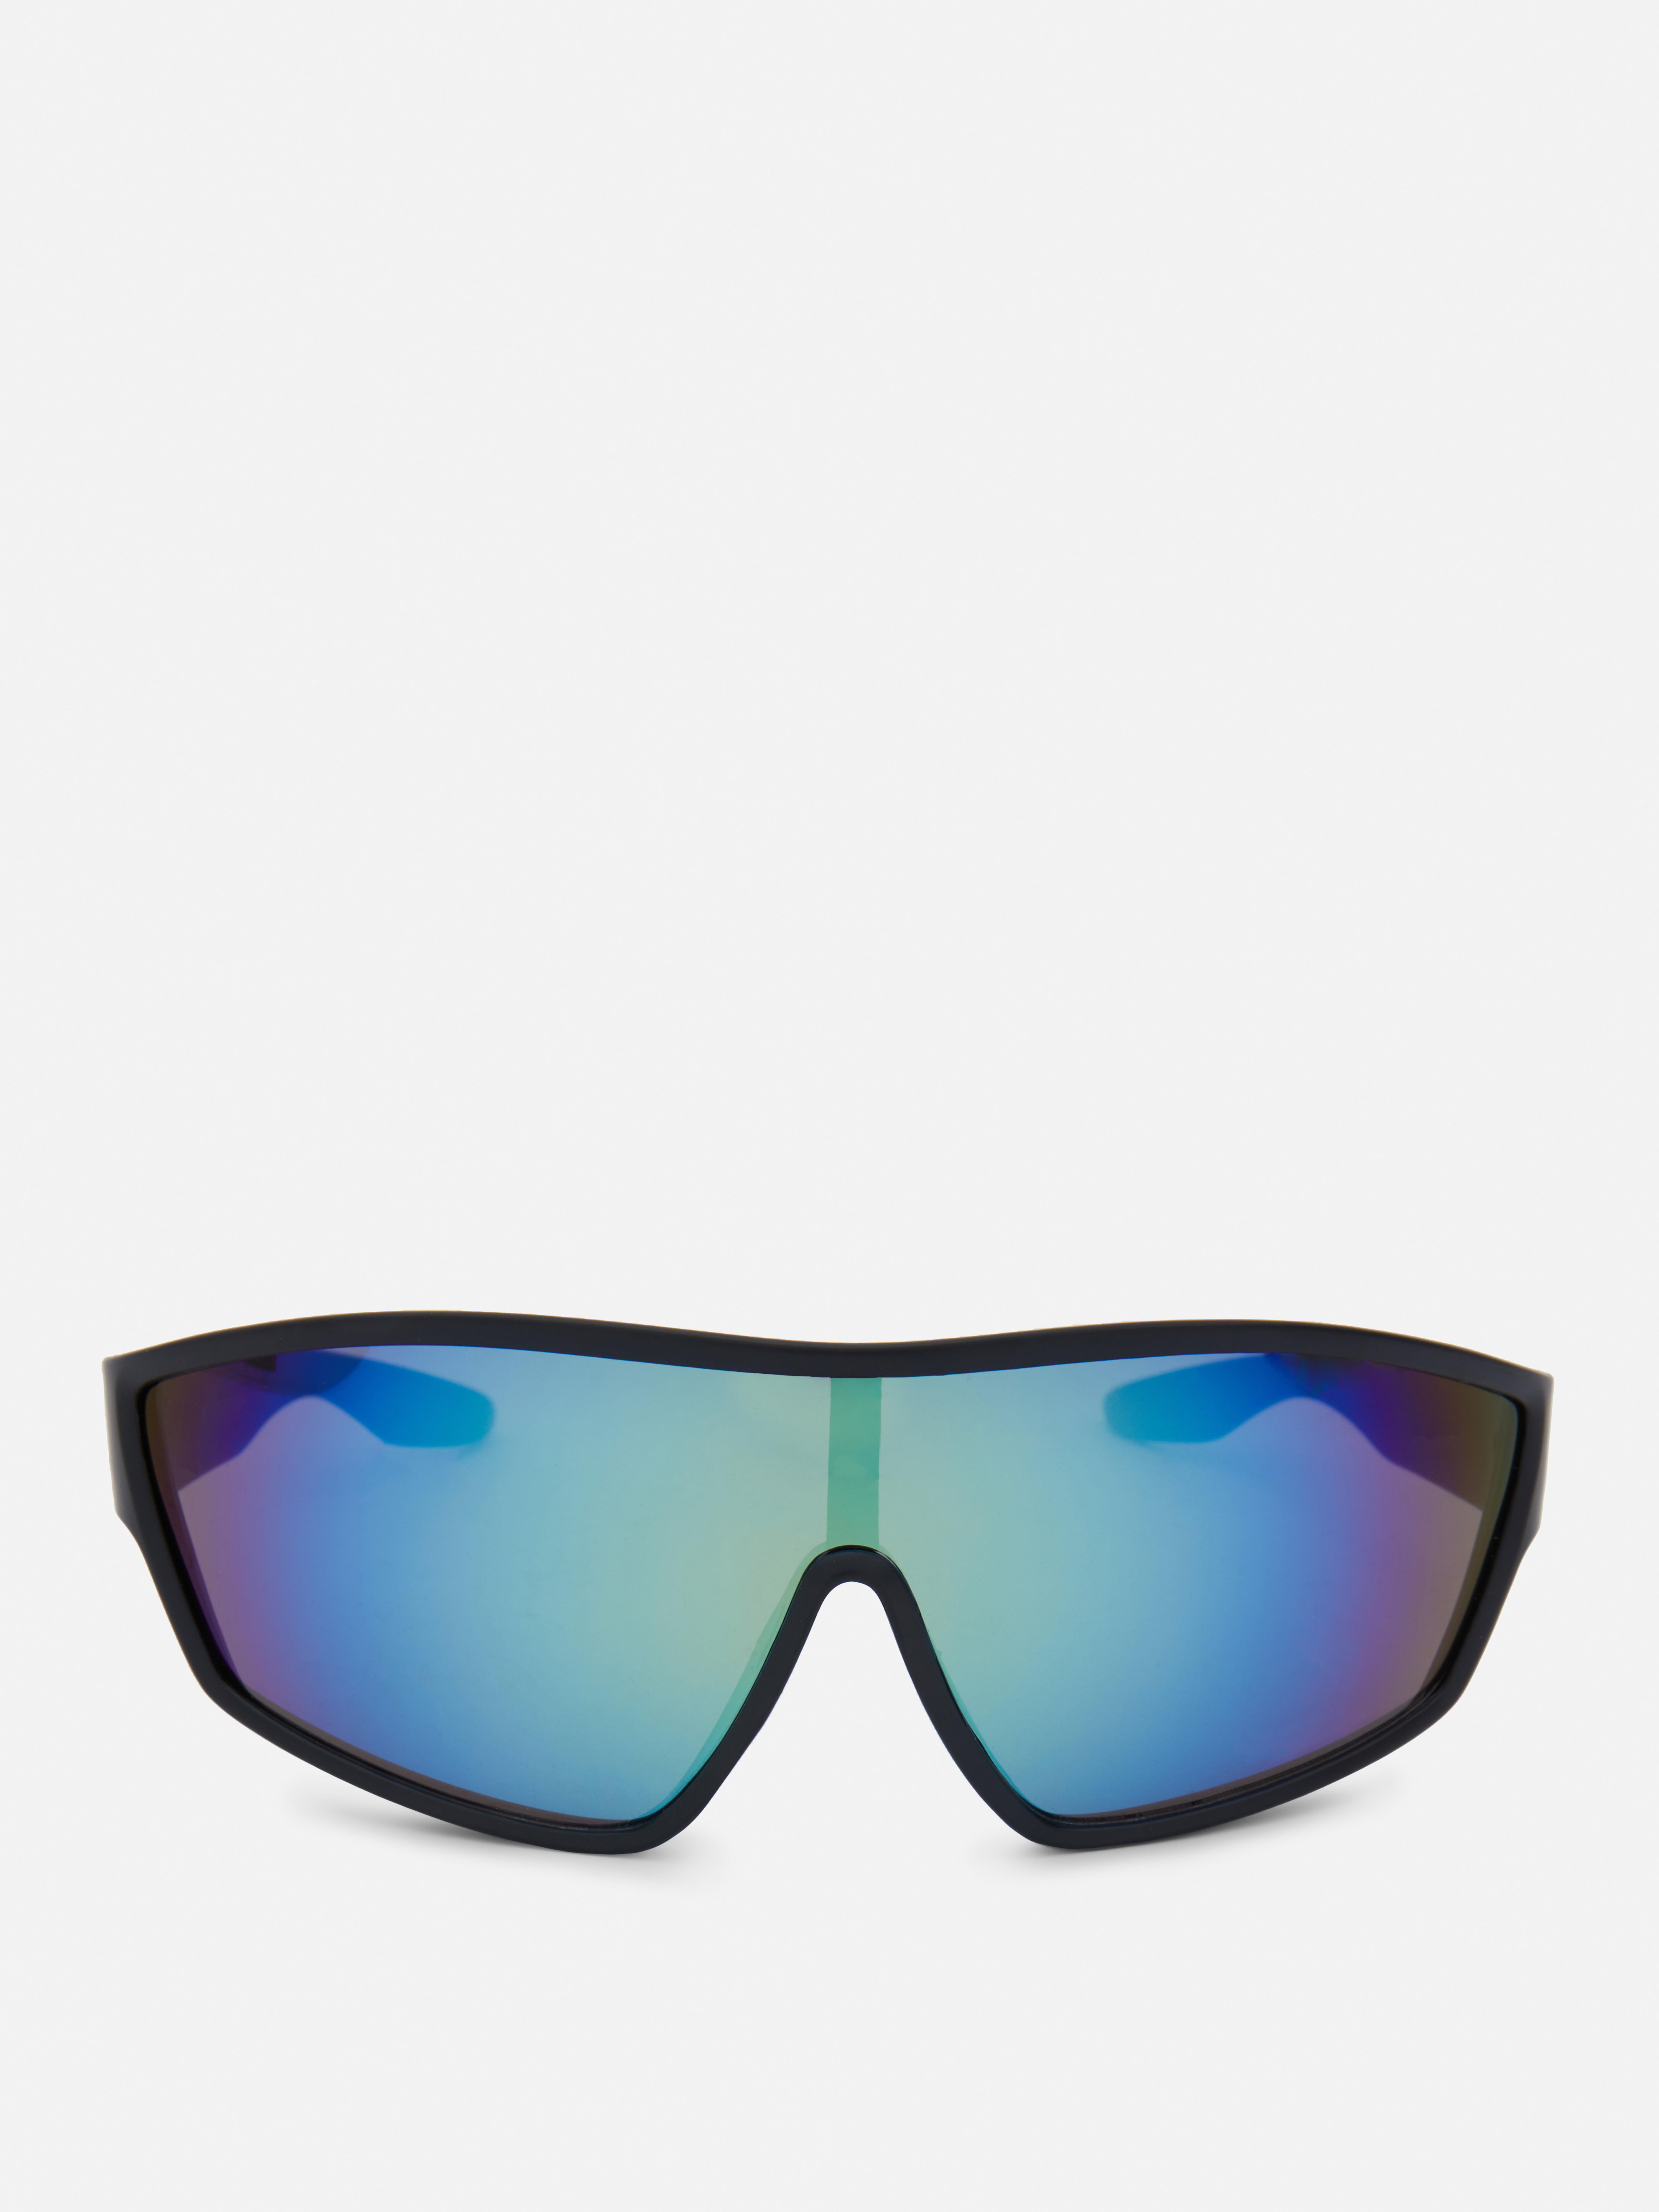 XL Shield Sunglasses